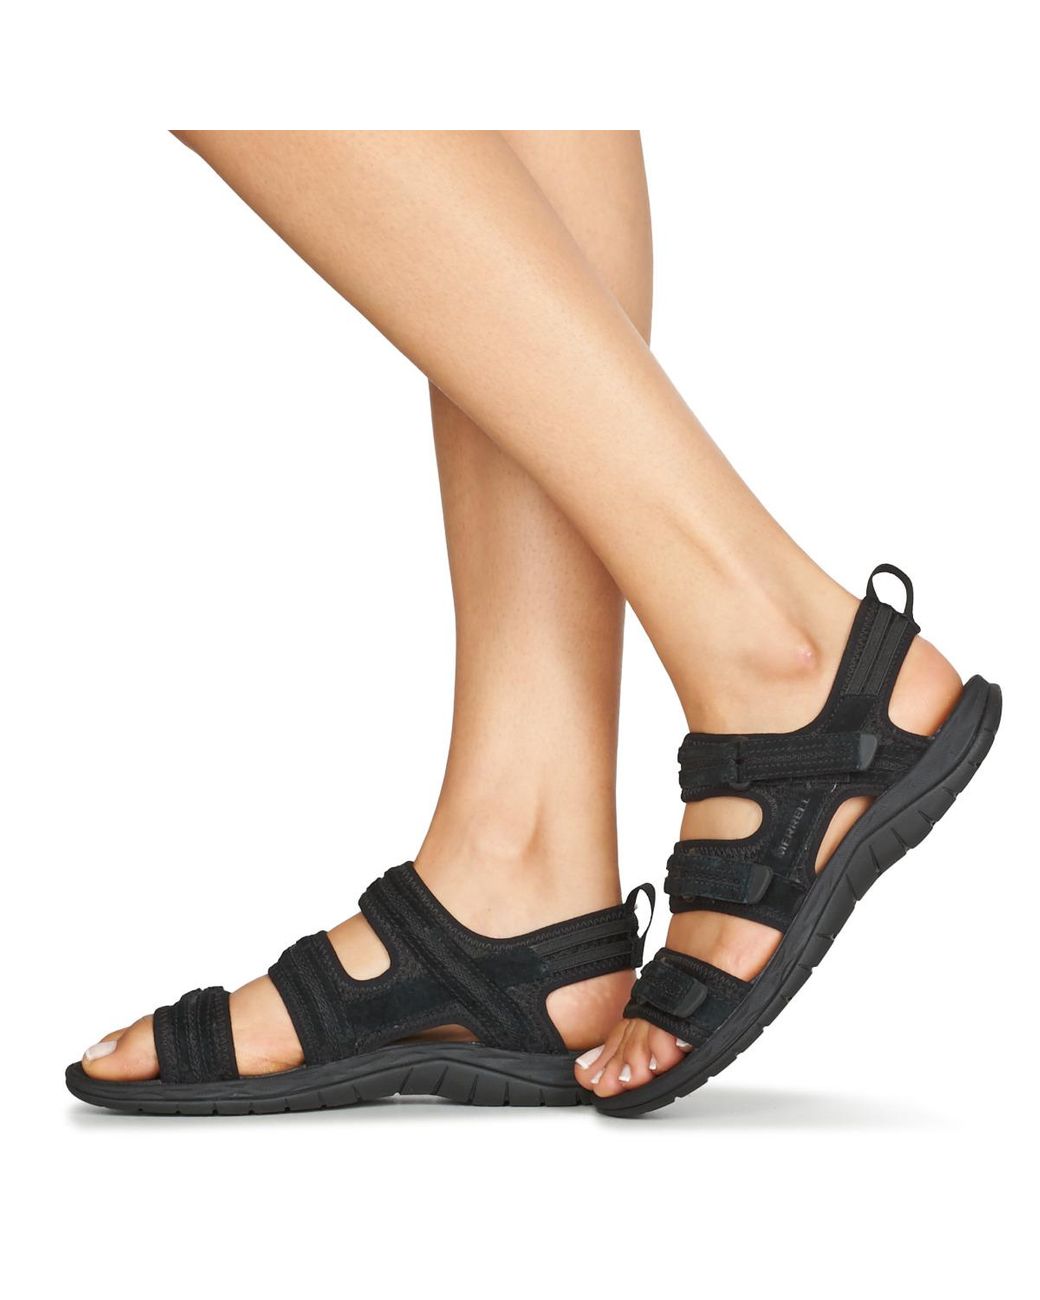 Merrell Siren 2 Strap Sandals in Black | Lyst UK